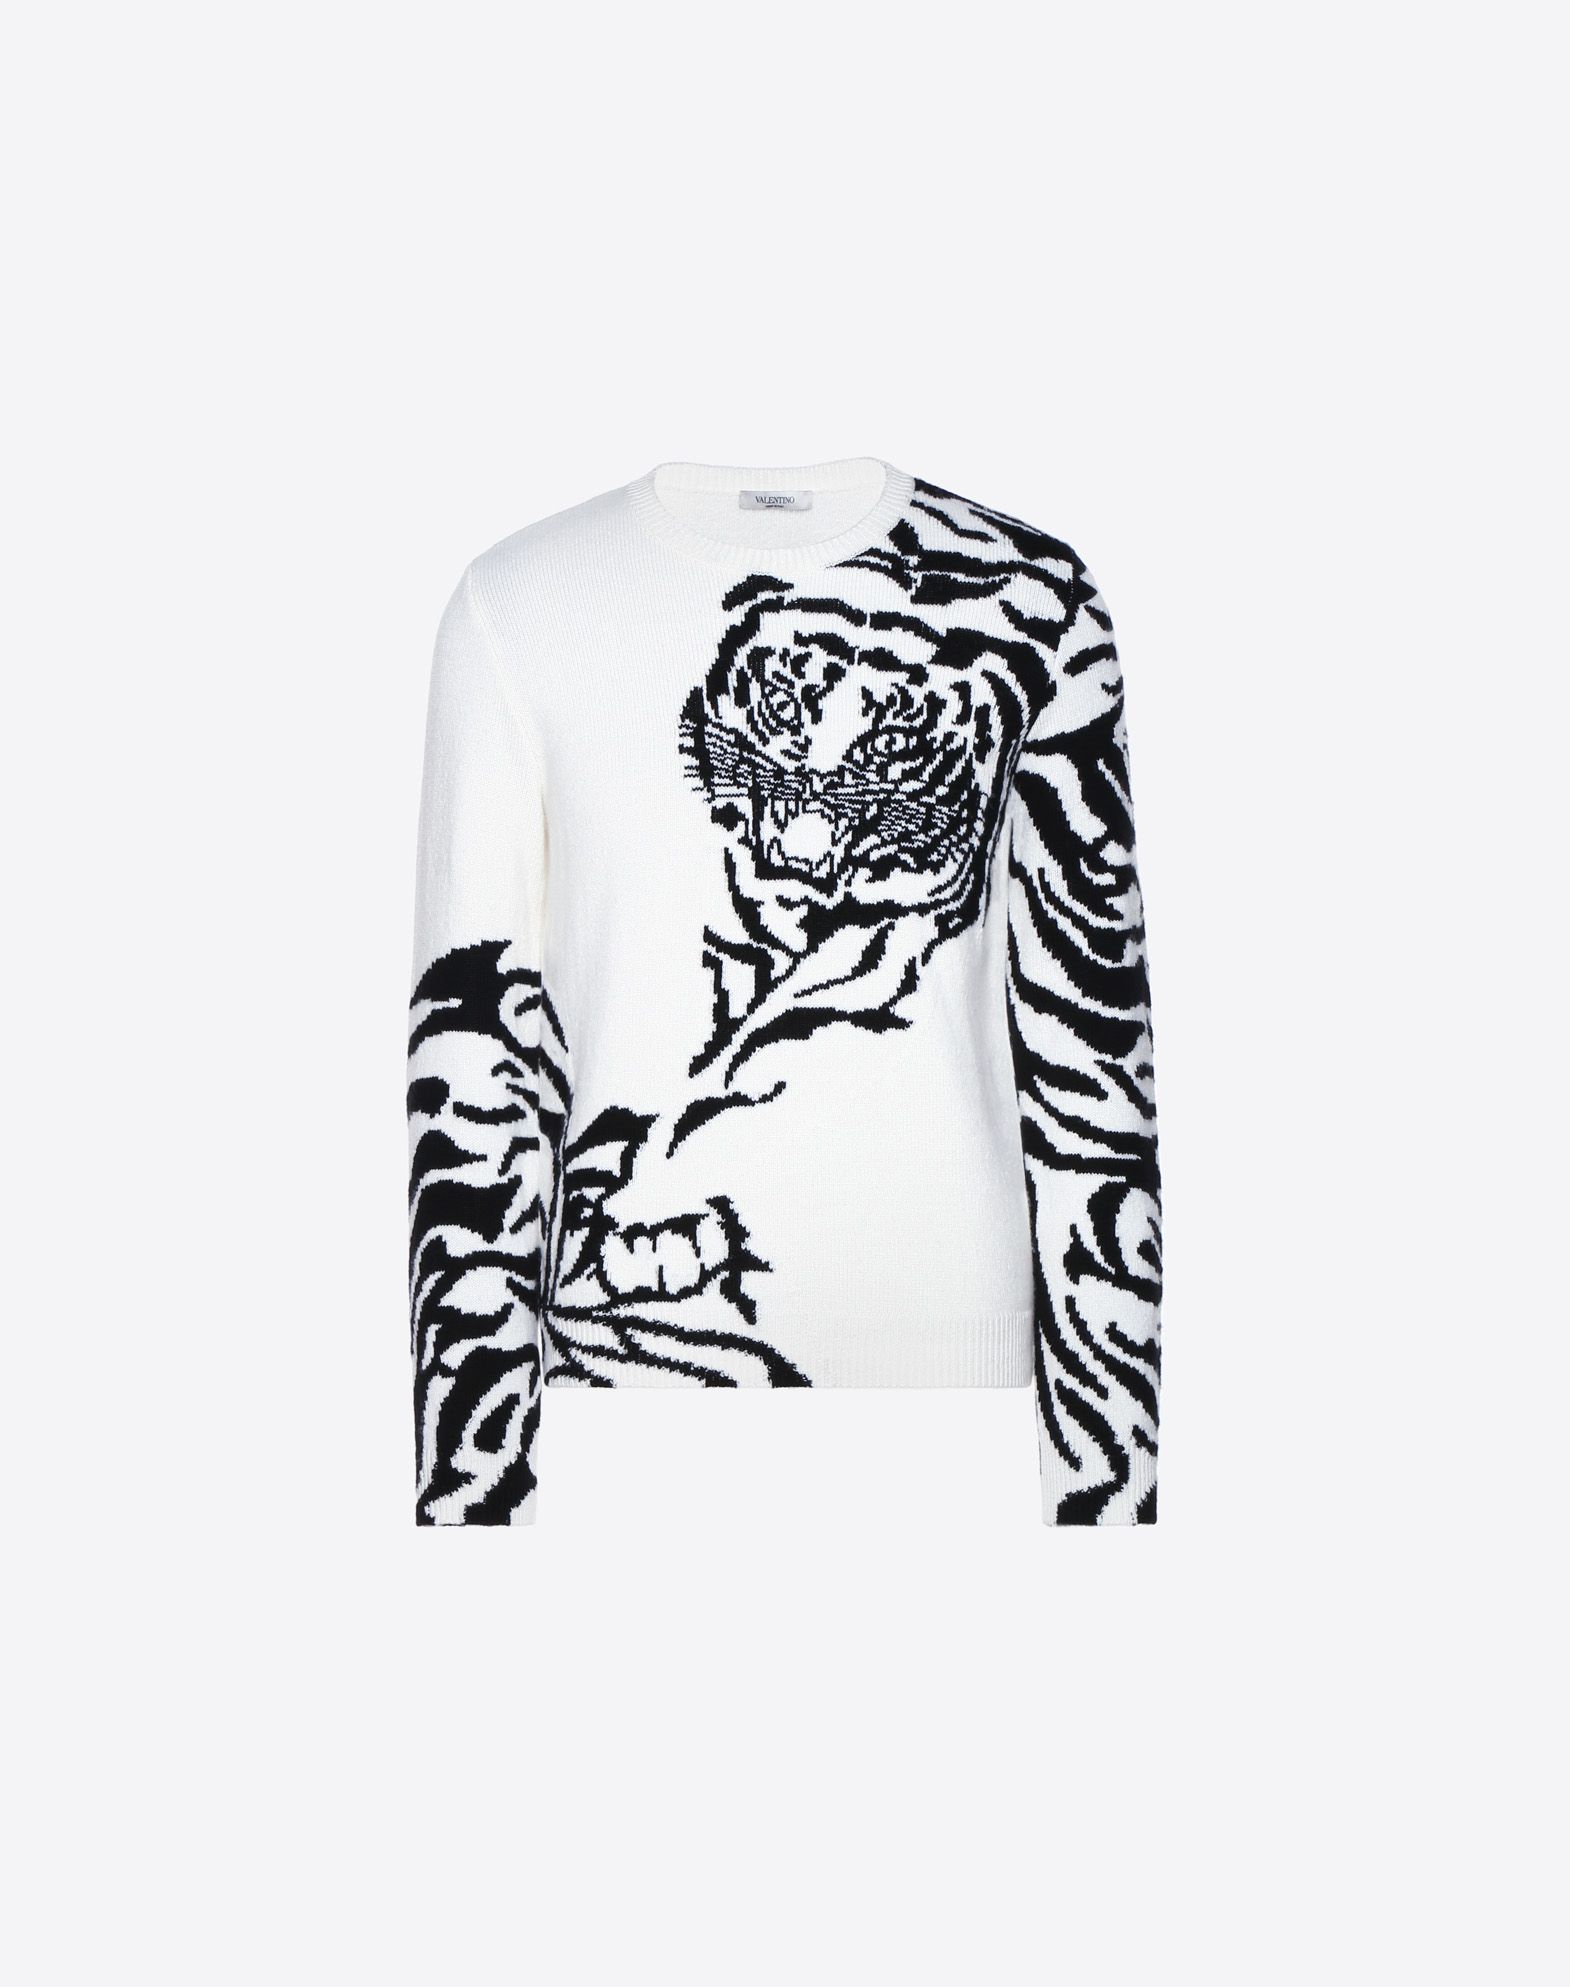 Valentino Cashmere Jumper with Intarsia Tiger men's designer tops that are perfect for winter.